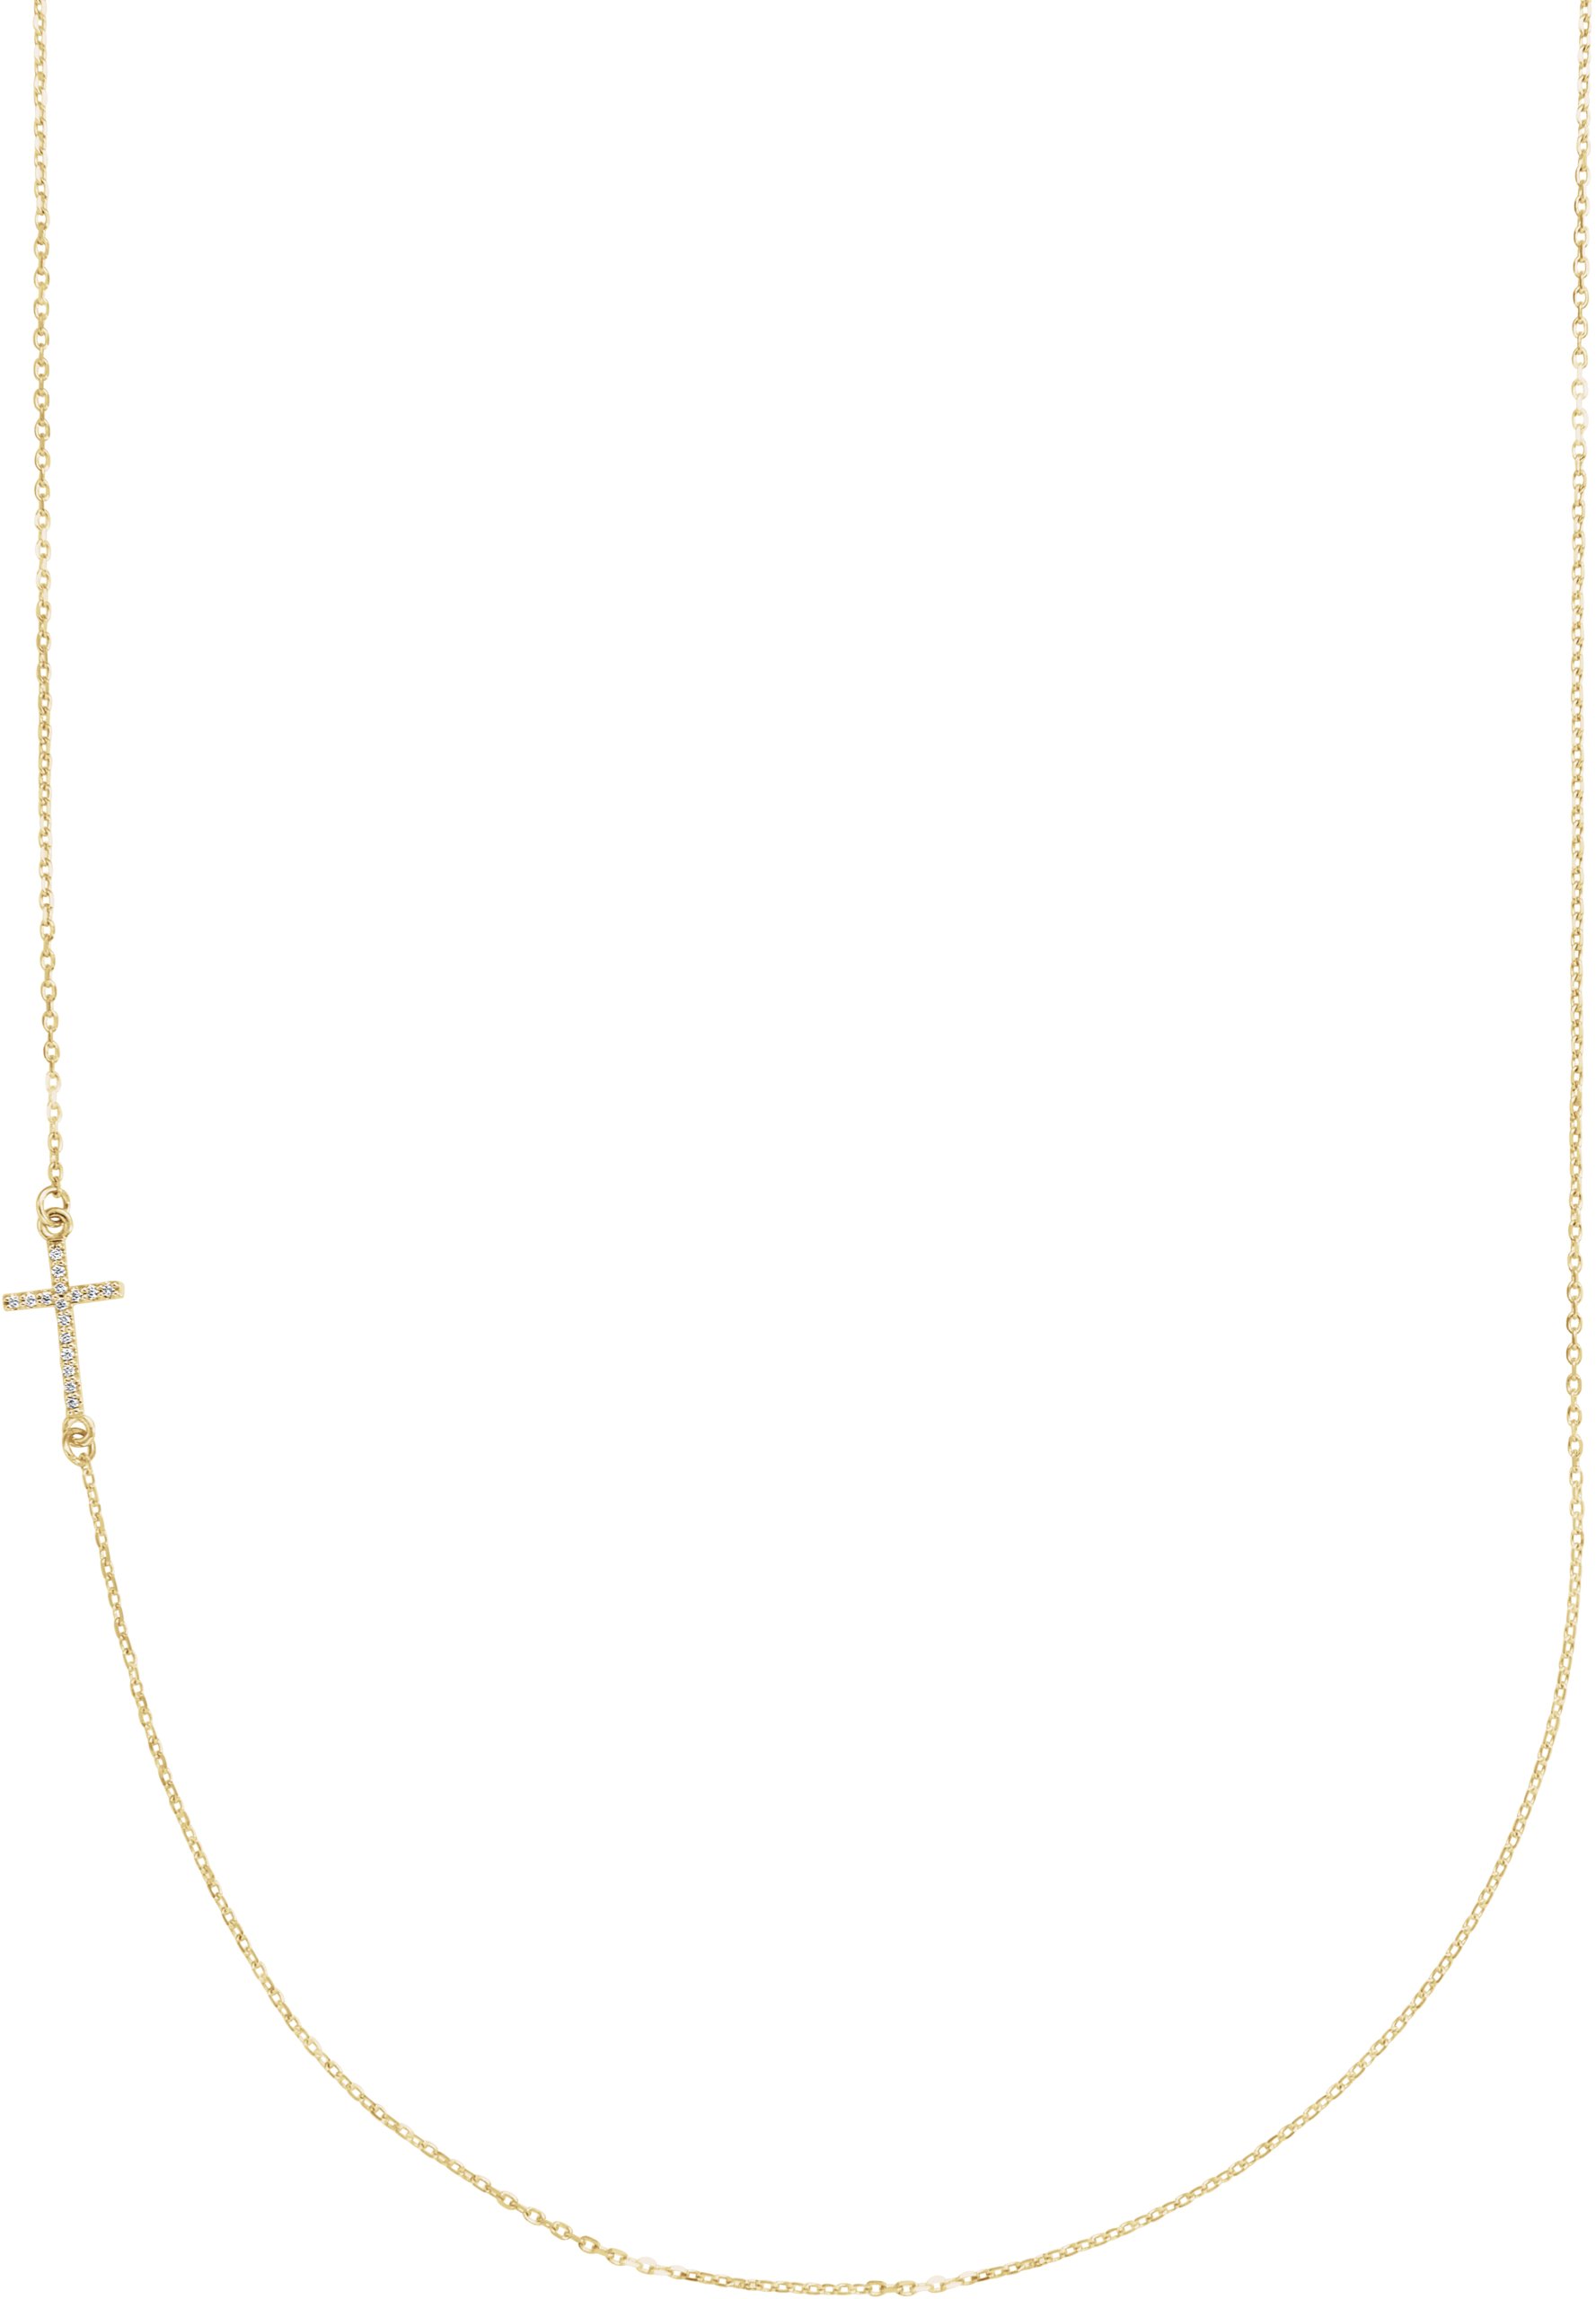 14K Yellow .04 CTW Diamond Off Center Sideways Cross 16 inch Necklace Ref. 13201848